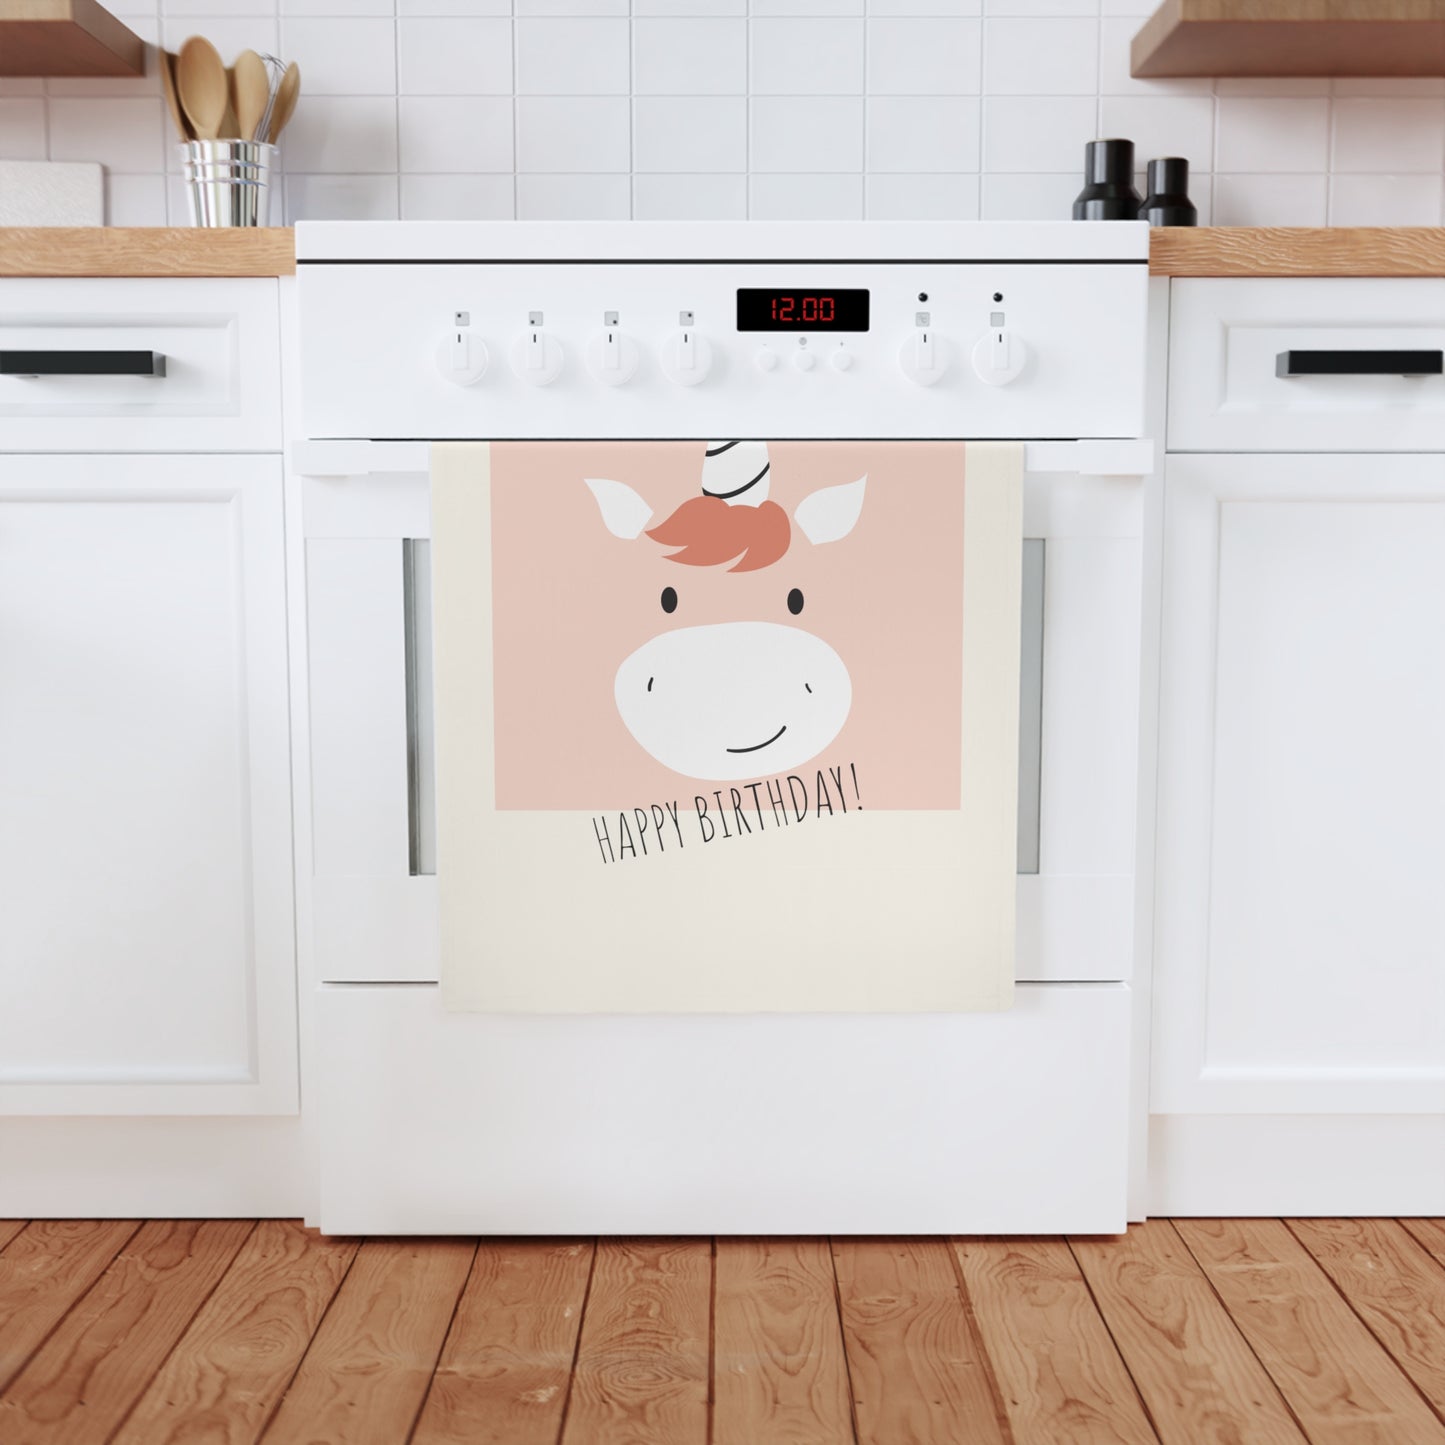 Cute unicorn kitchen tea towel gift for Christmas or Birthday, Be that unicorn